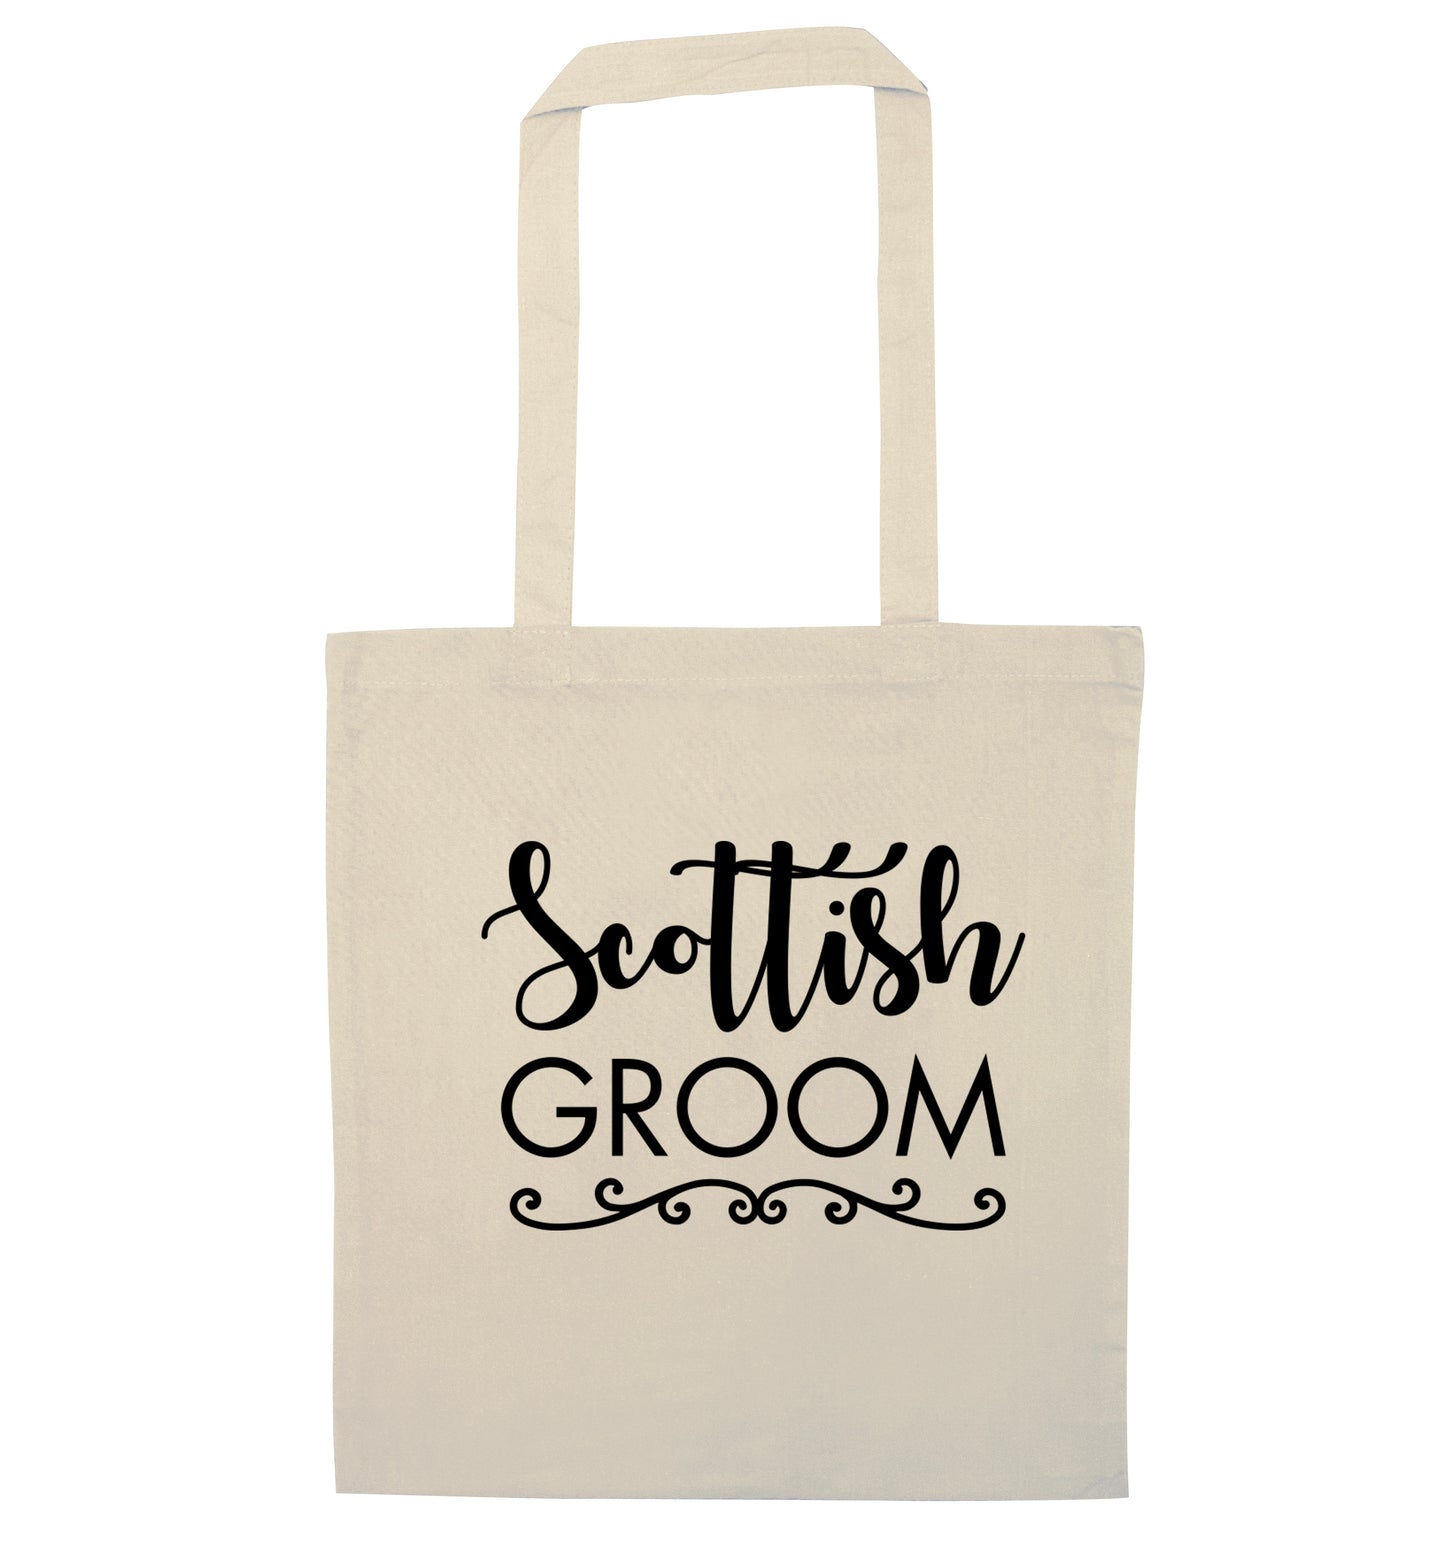 Scottish groom natural tote bag